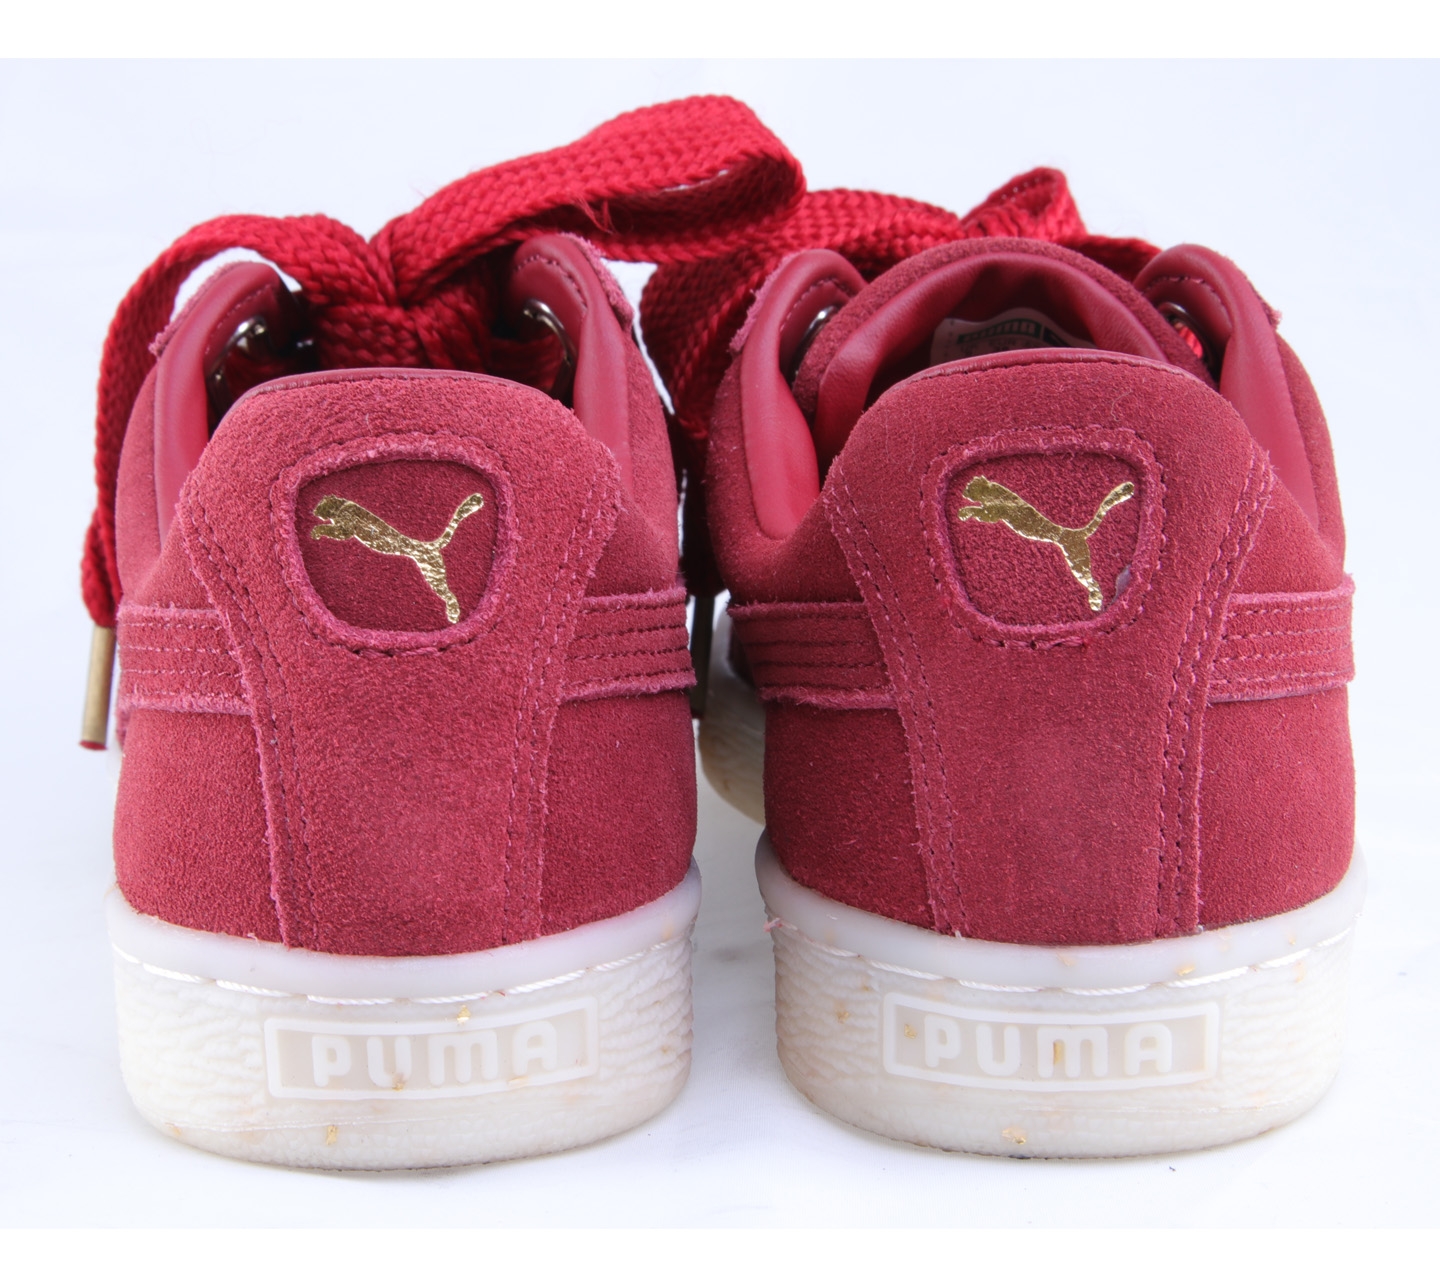 Puma Red Suede Heart Celebrate Wns Dahlia Women Casual Sneakers